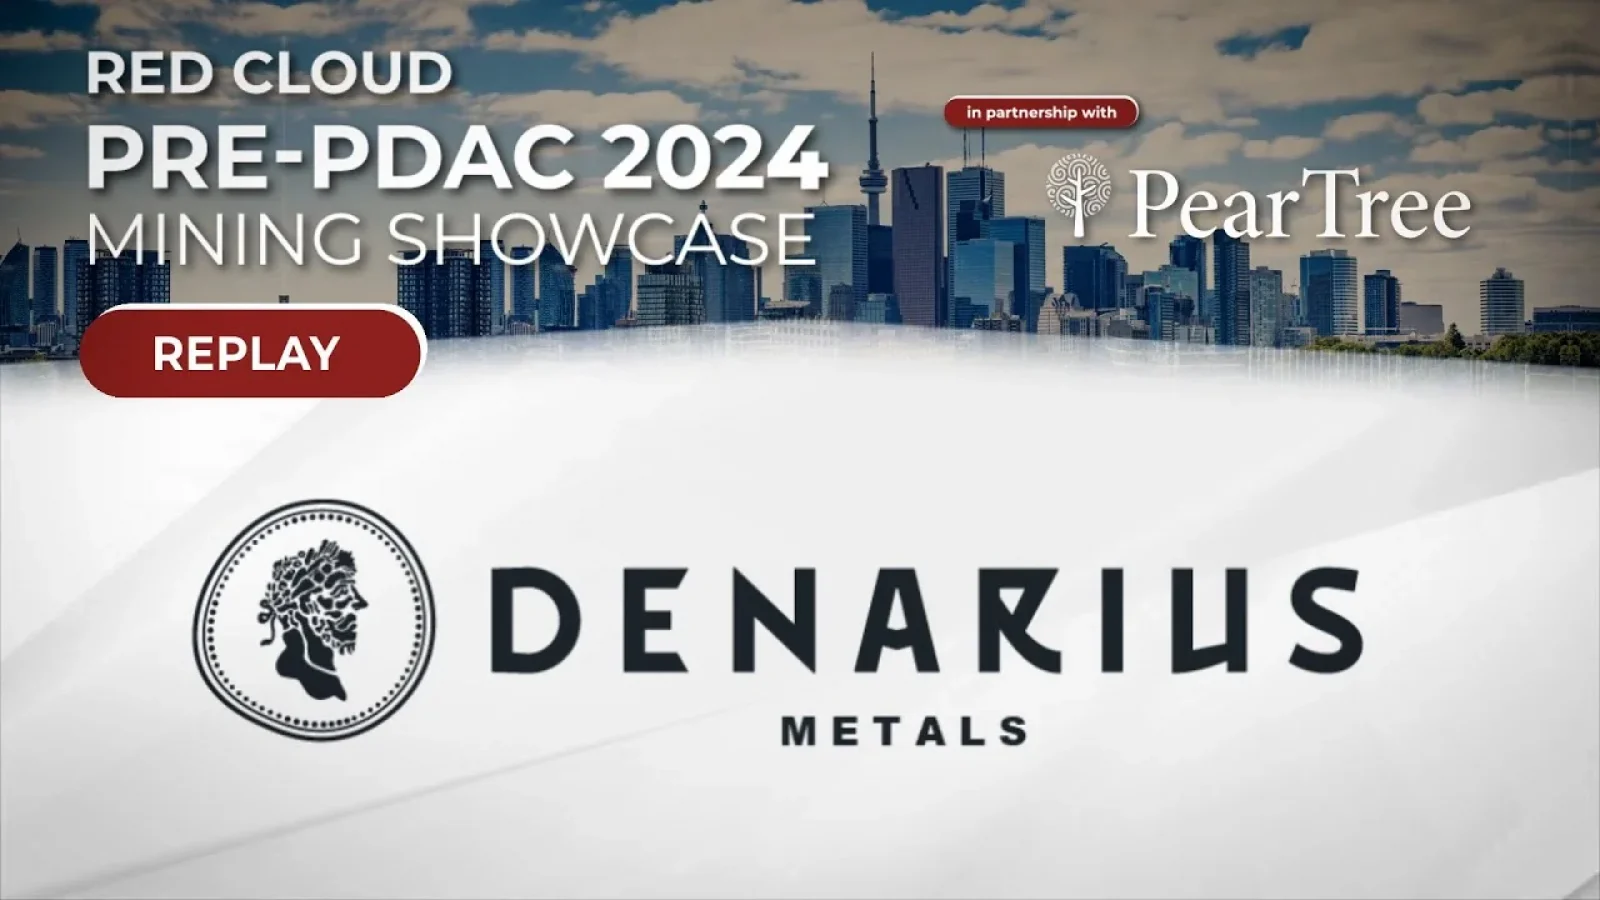 Denarius Metals